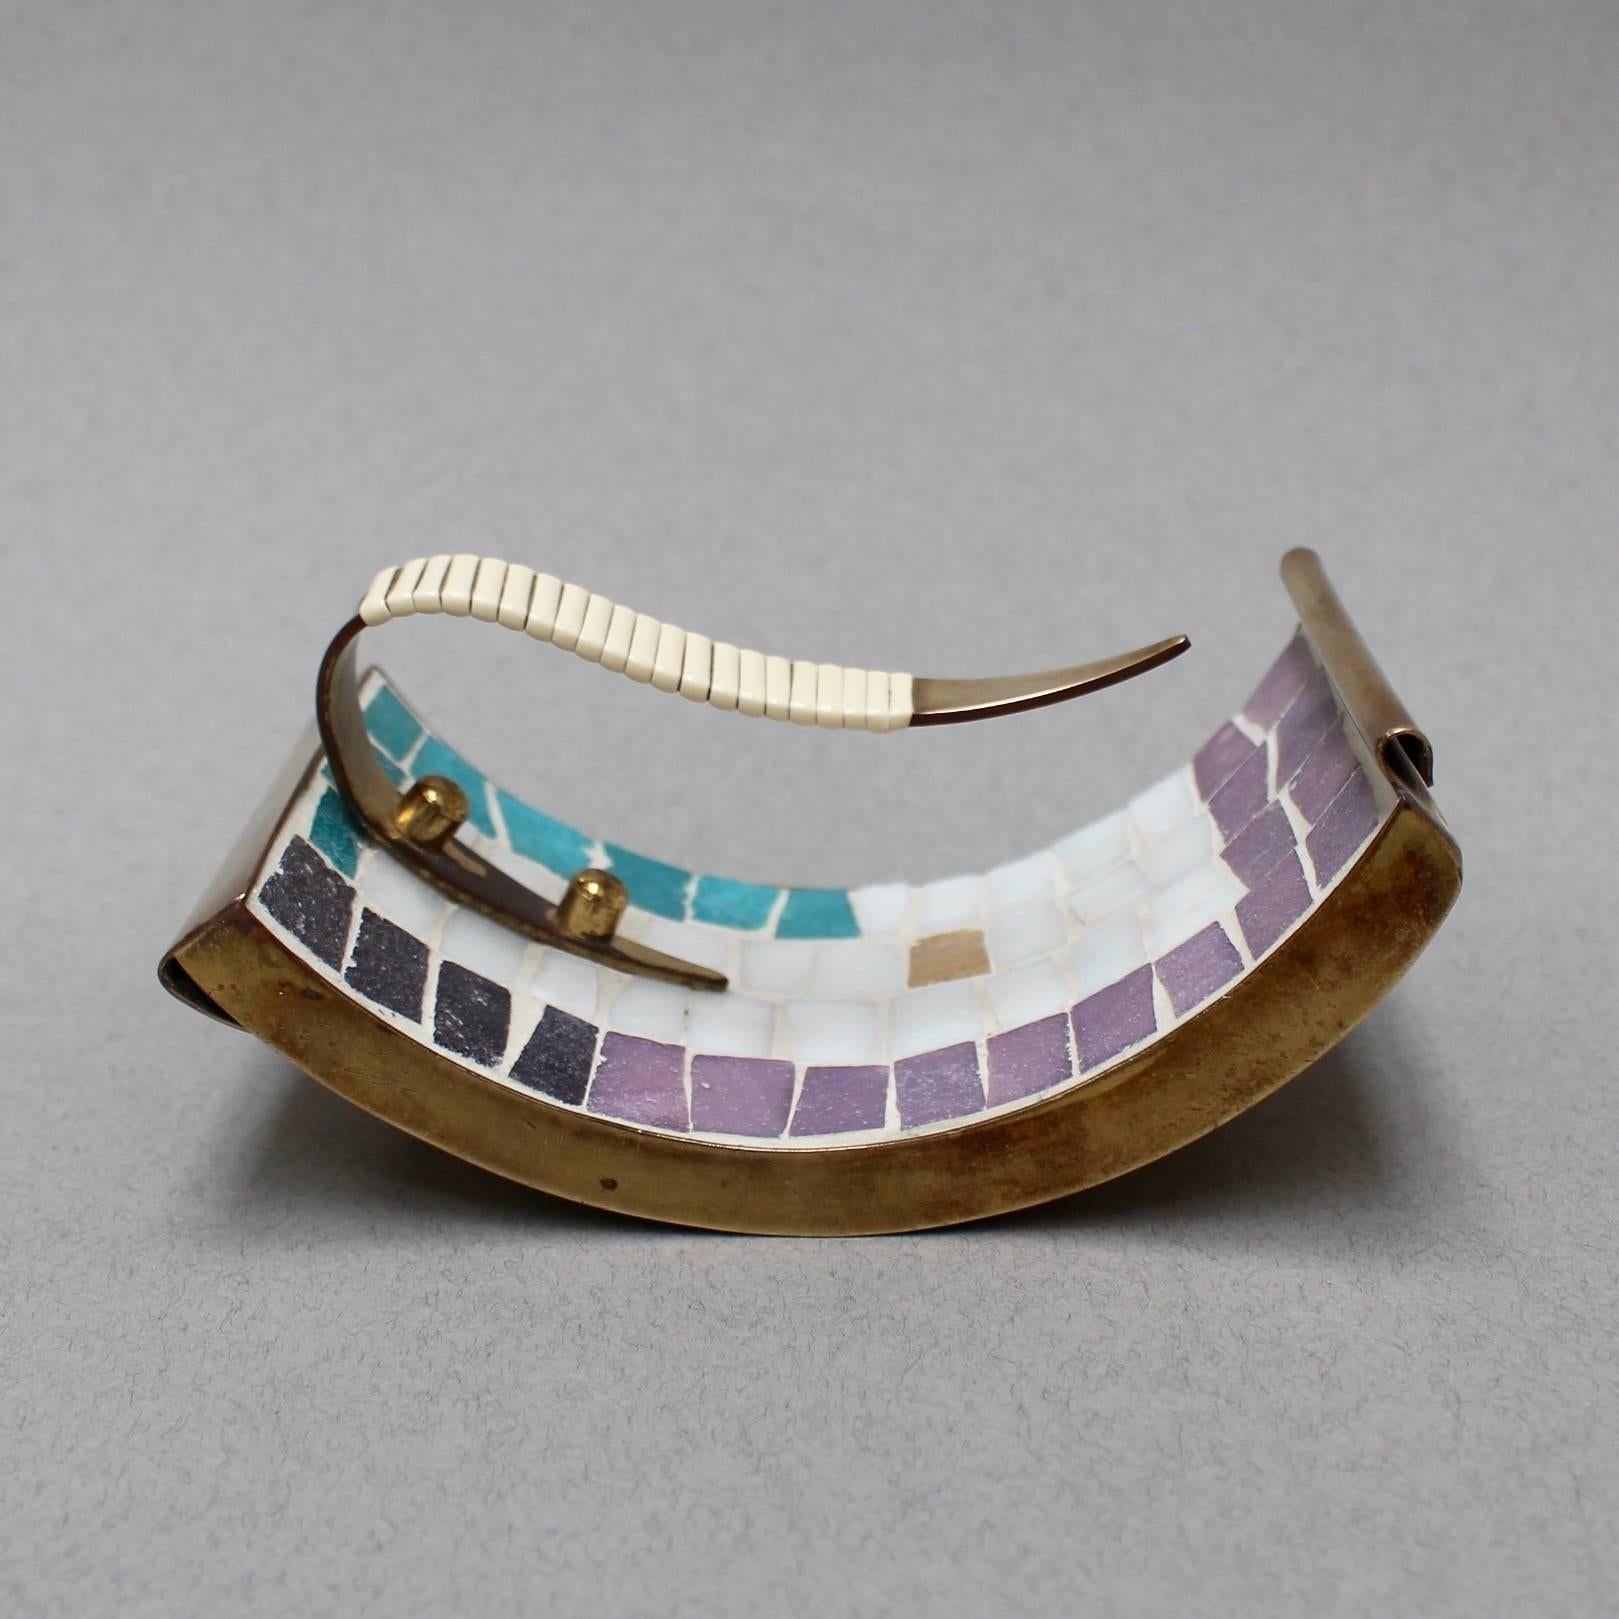 Midcentury Brass and Mosaic Ceramic Tiled Desk Accessories Set, Circa 1960s 1